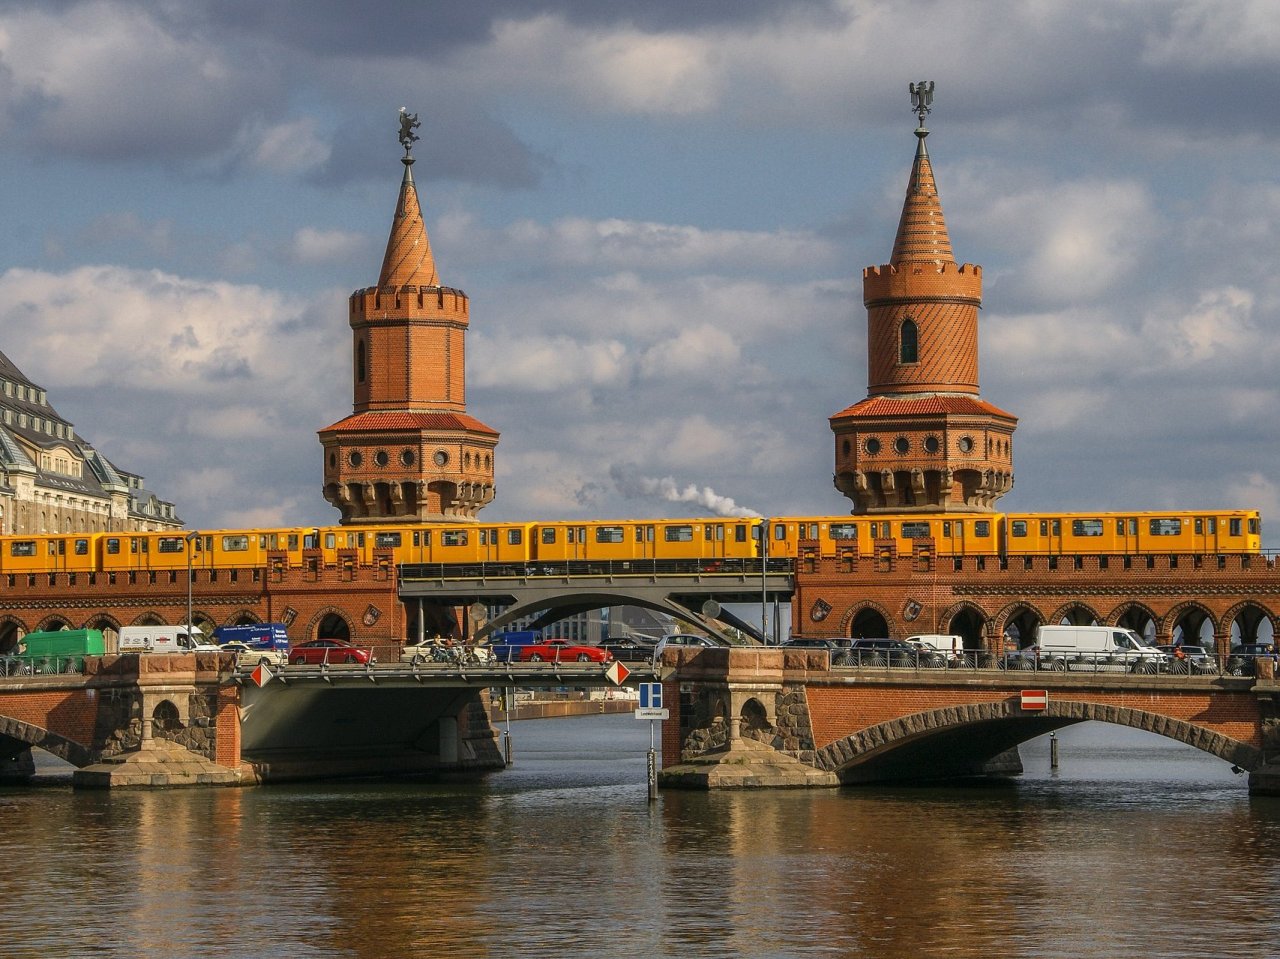 The Oberbaum Bridge in Berlin jigsaw puzzle